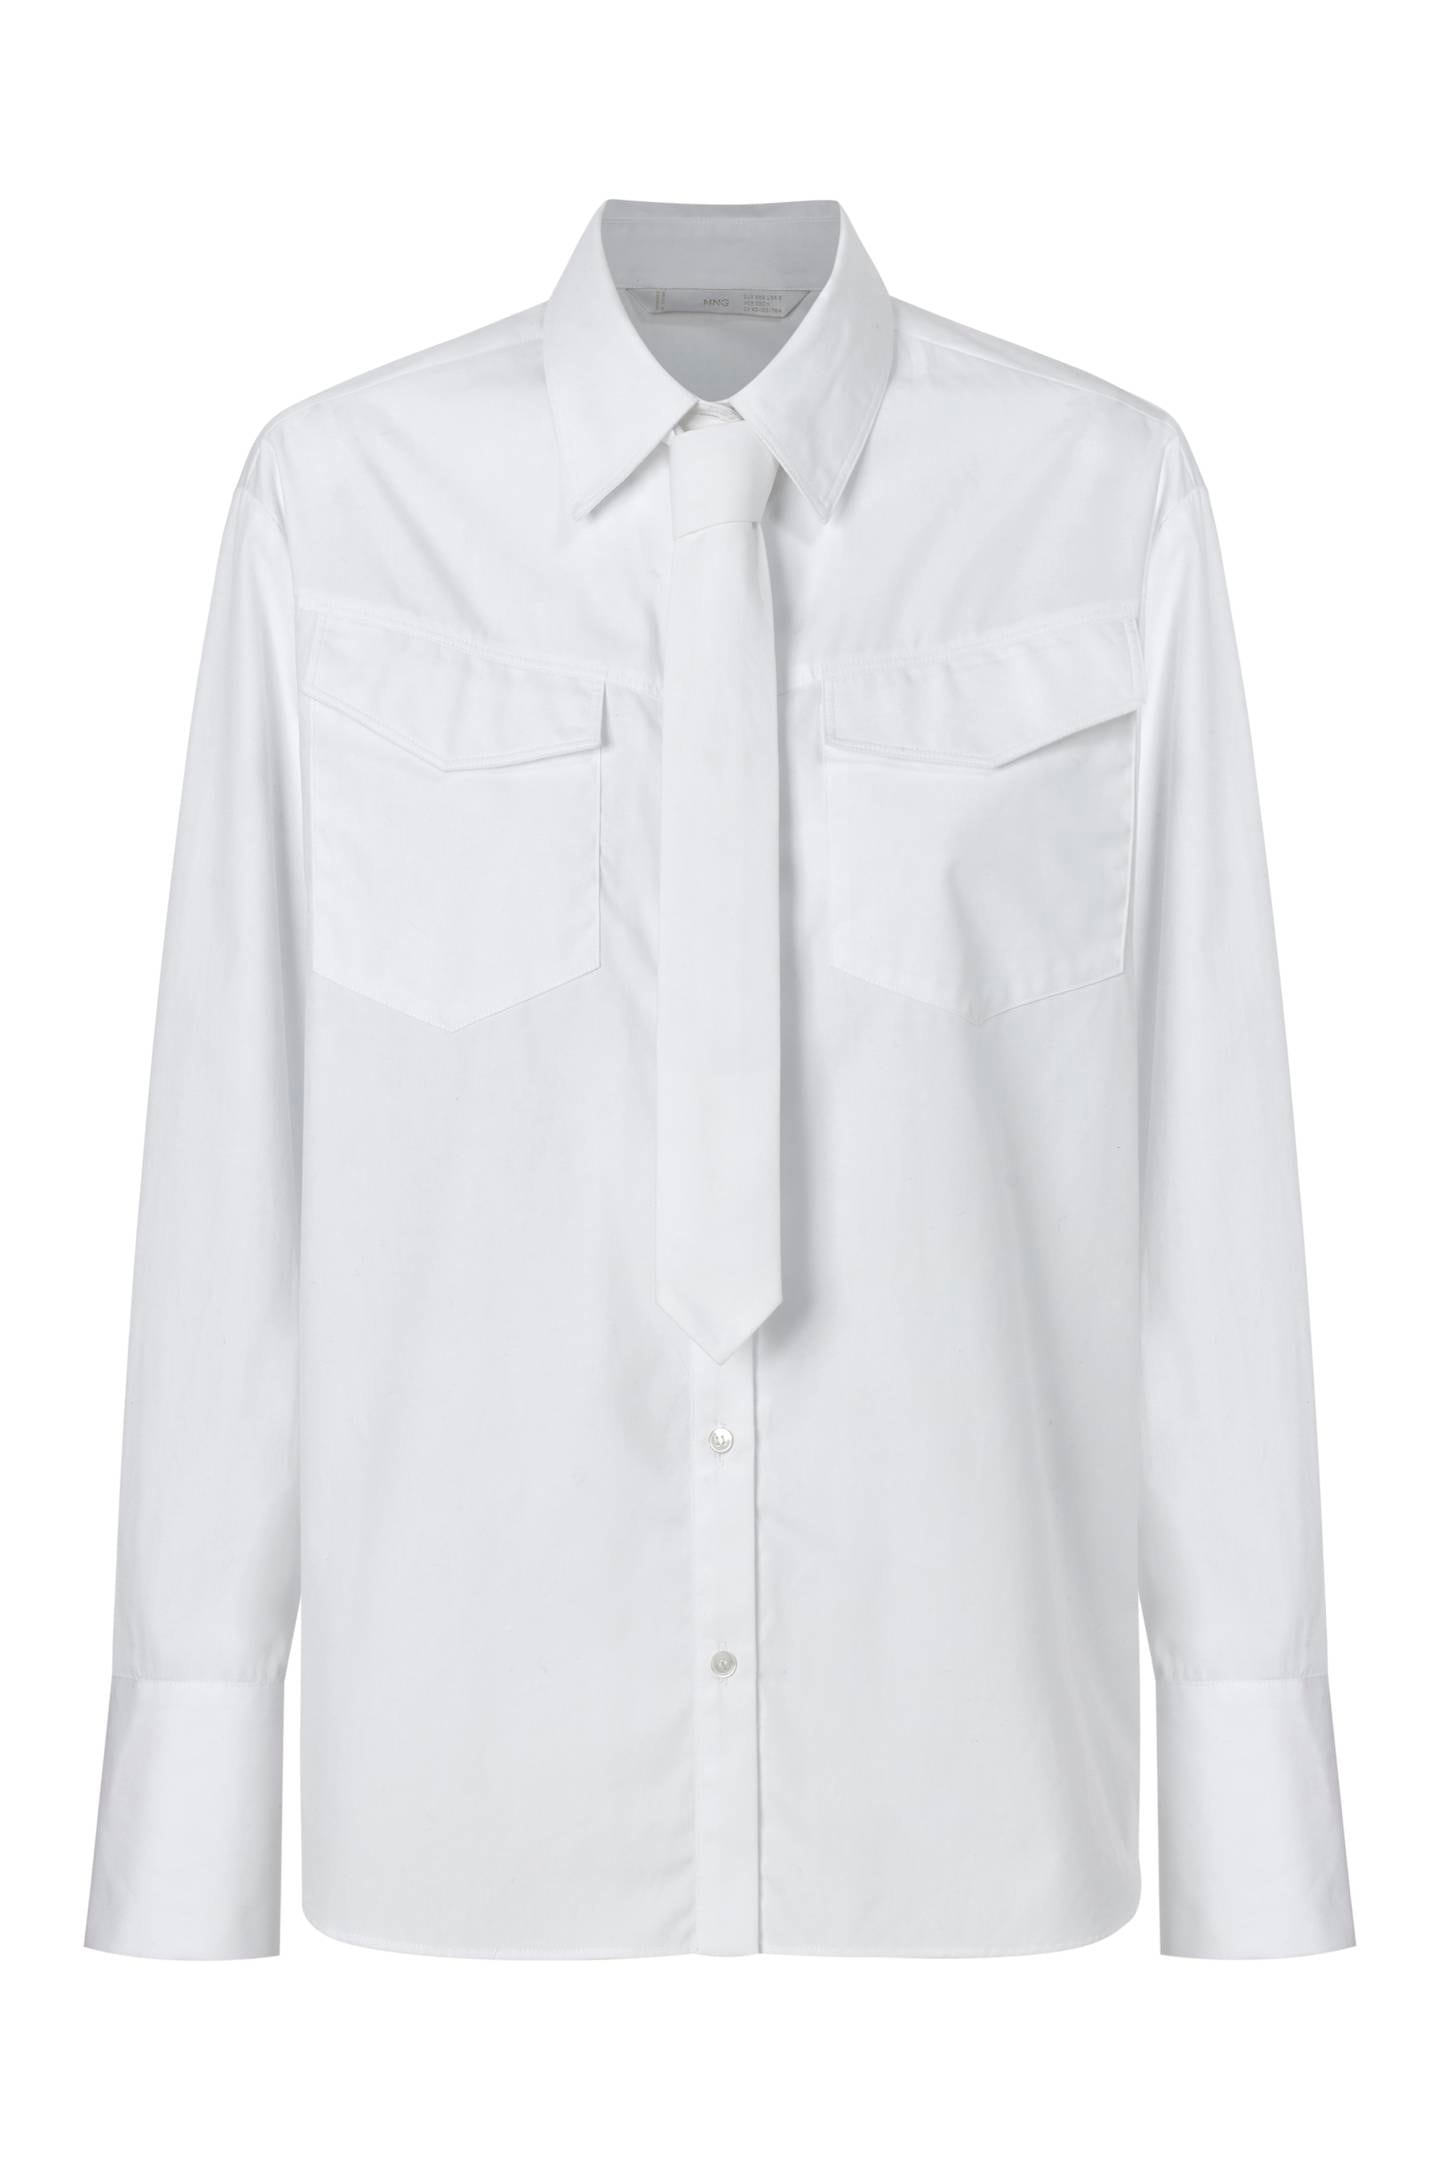 White shirt with tie, €59.99, Mango